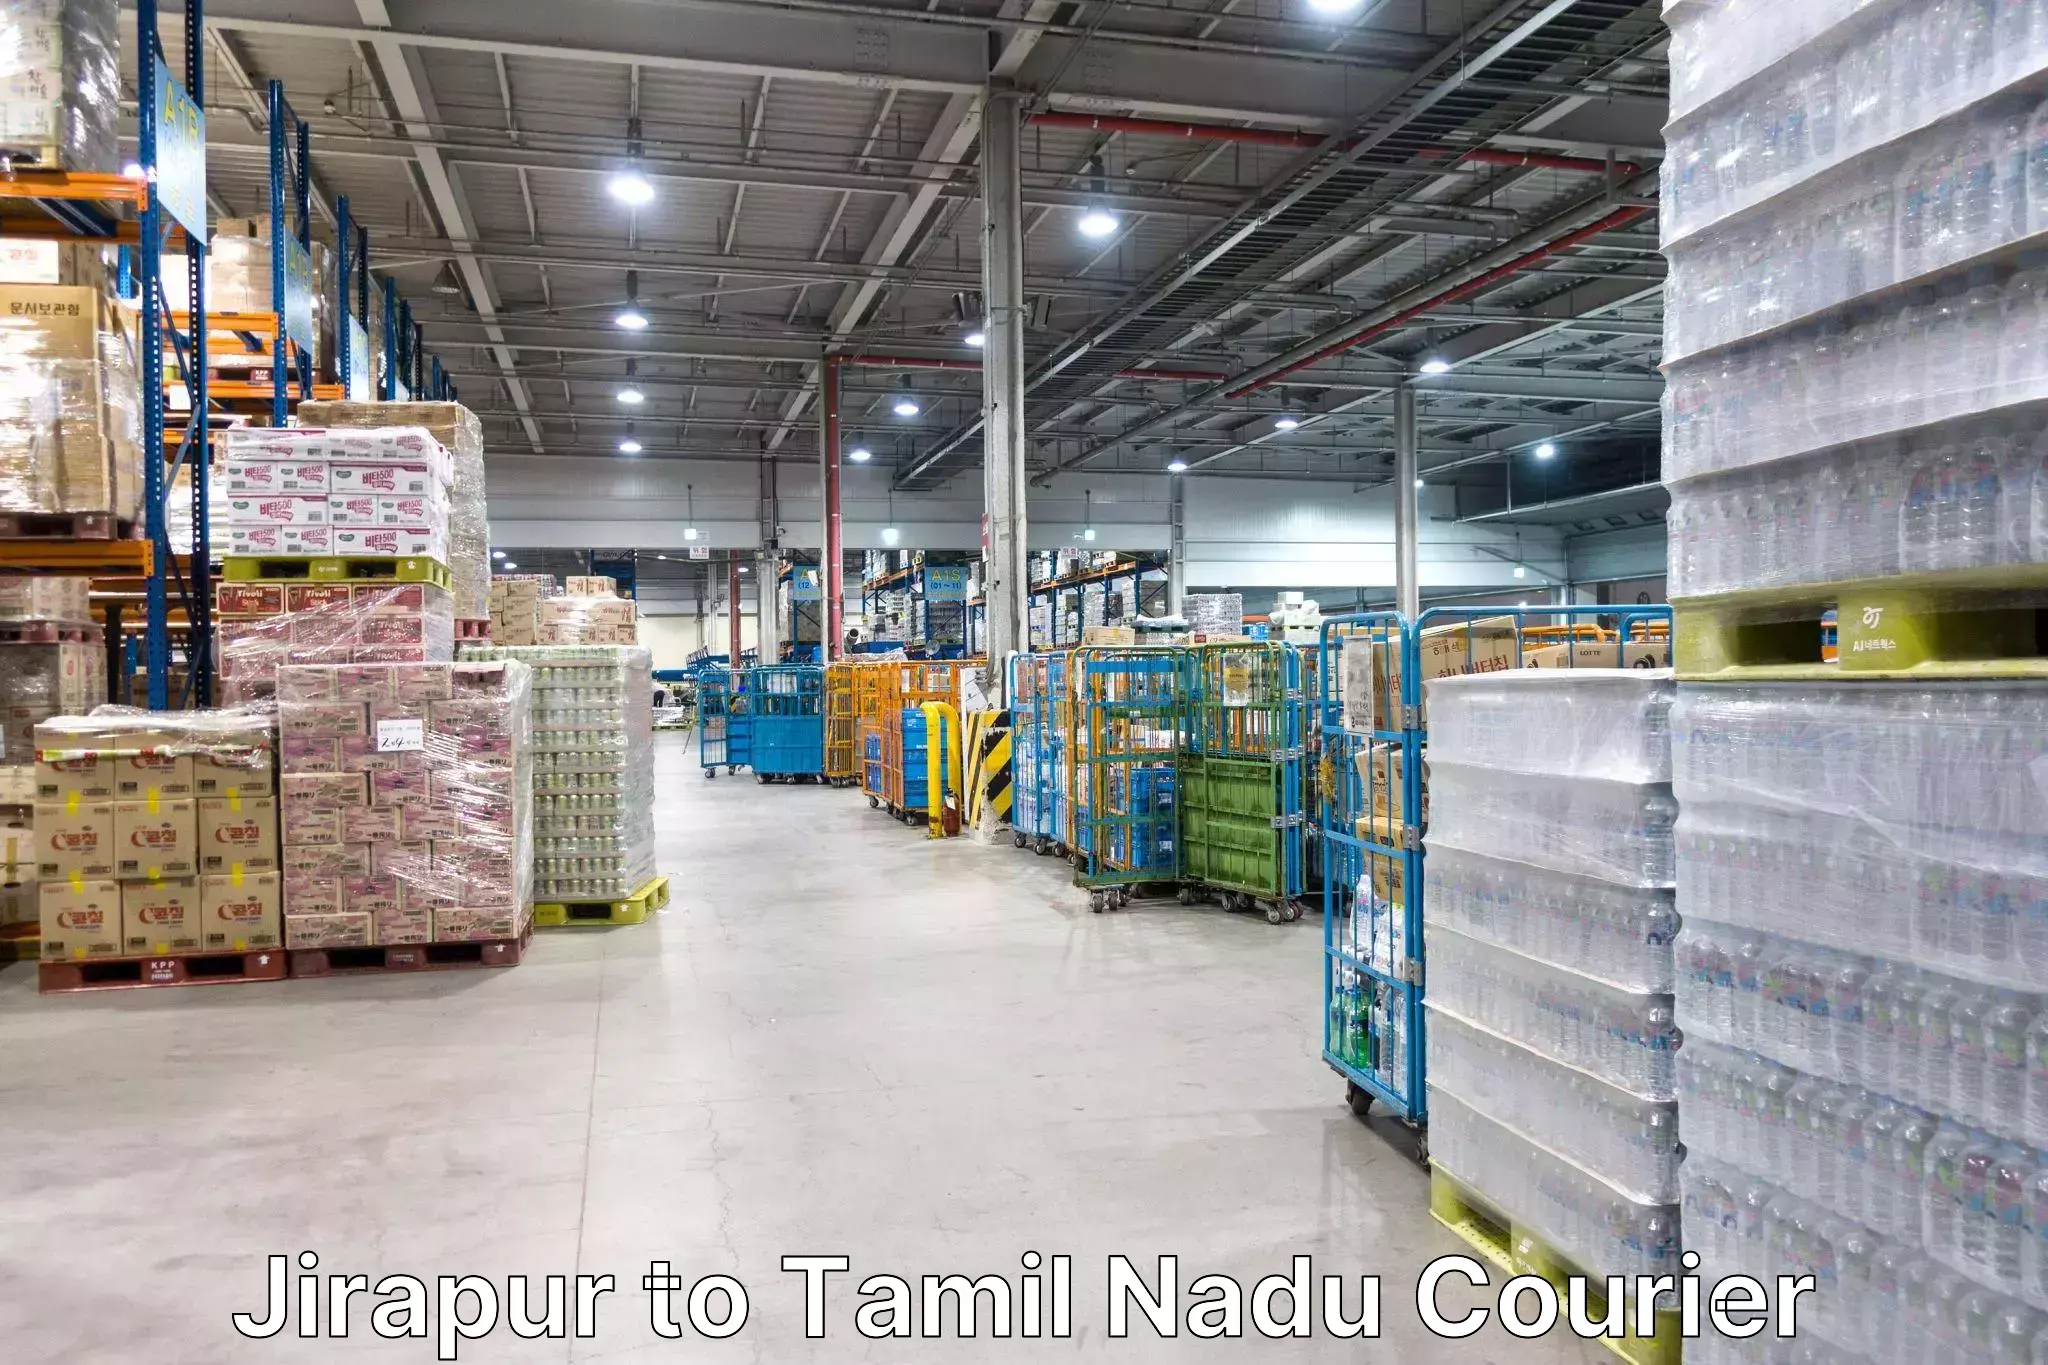 Courier service comparison Jirapur to Tamil Nadu